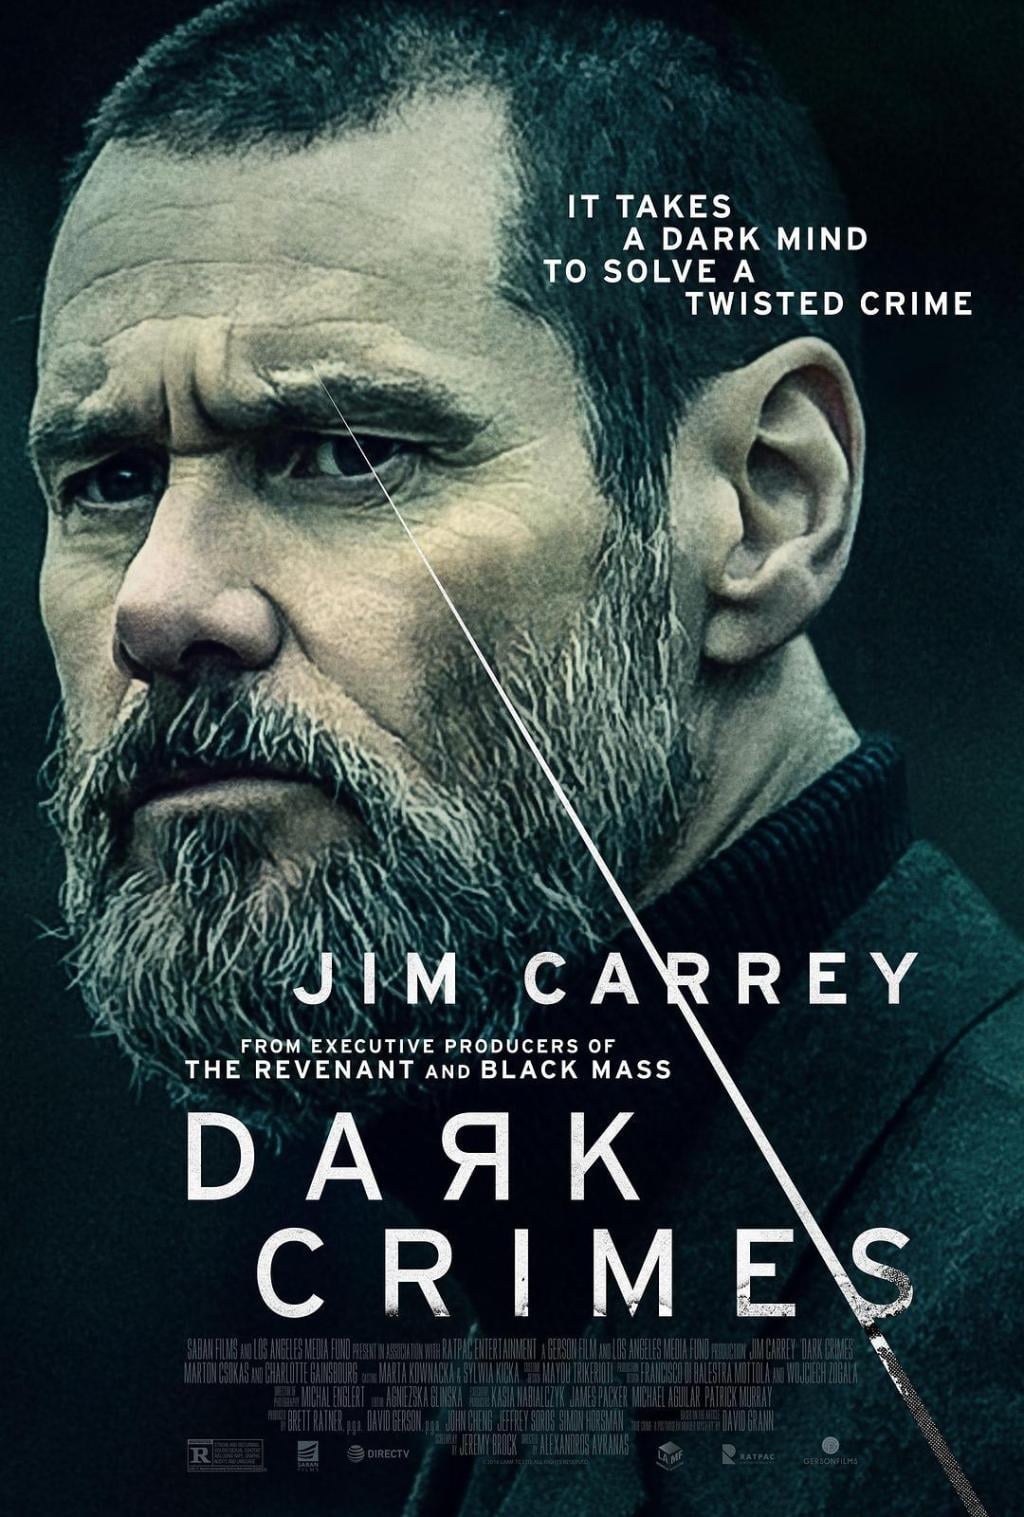 EN - Dark Crimes (2016) JIM CARREY